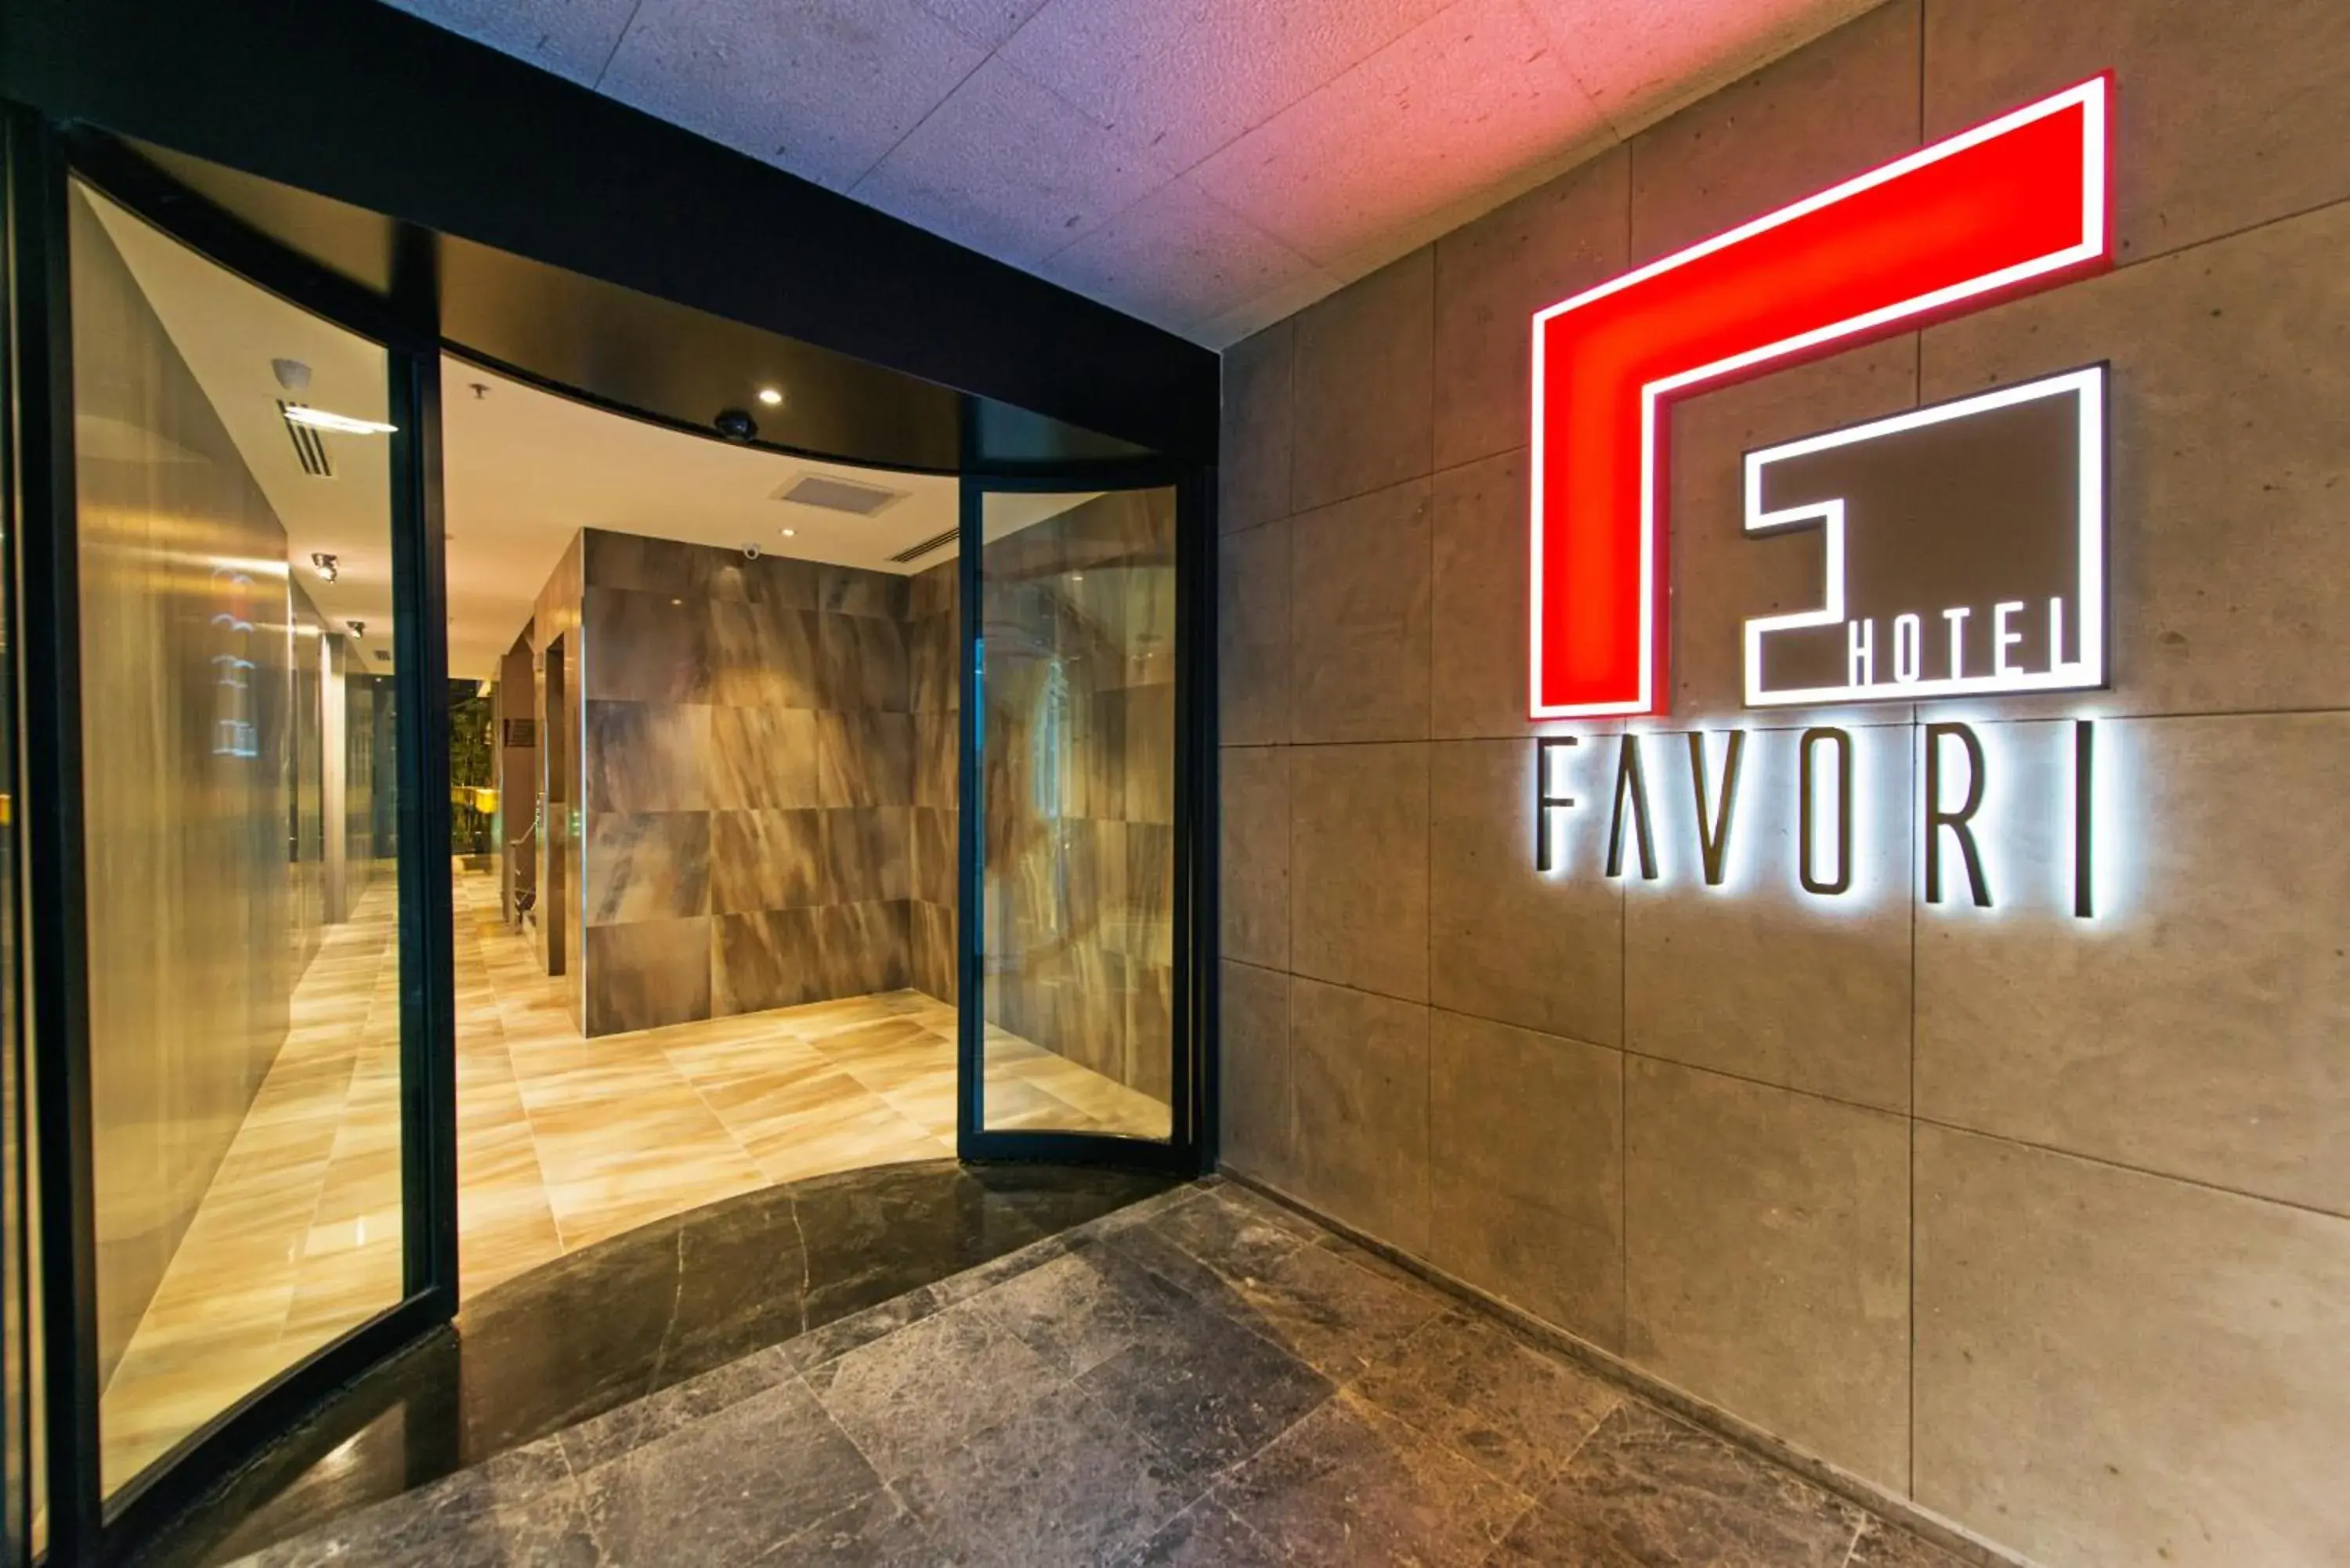 Facade/entrance in Favori Hotel